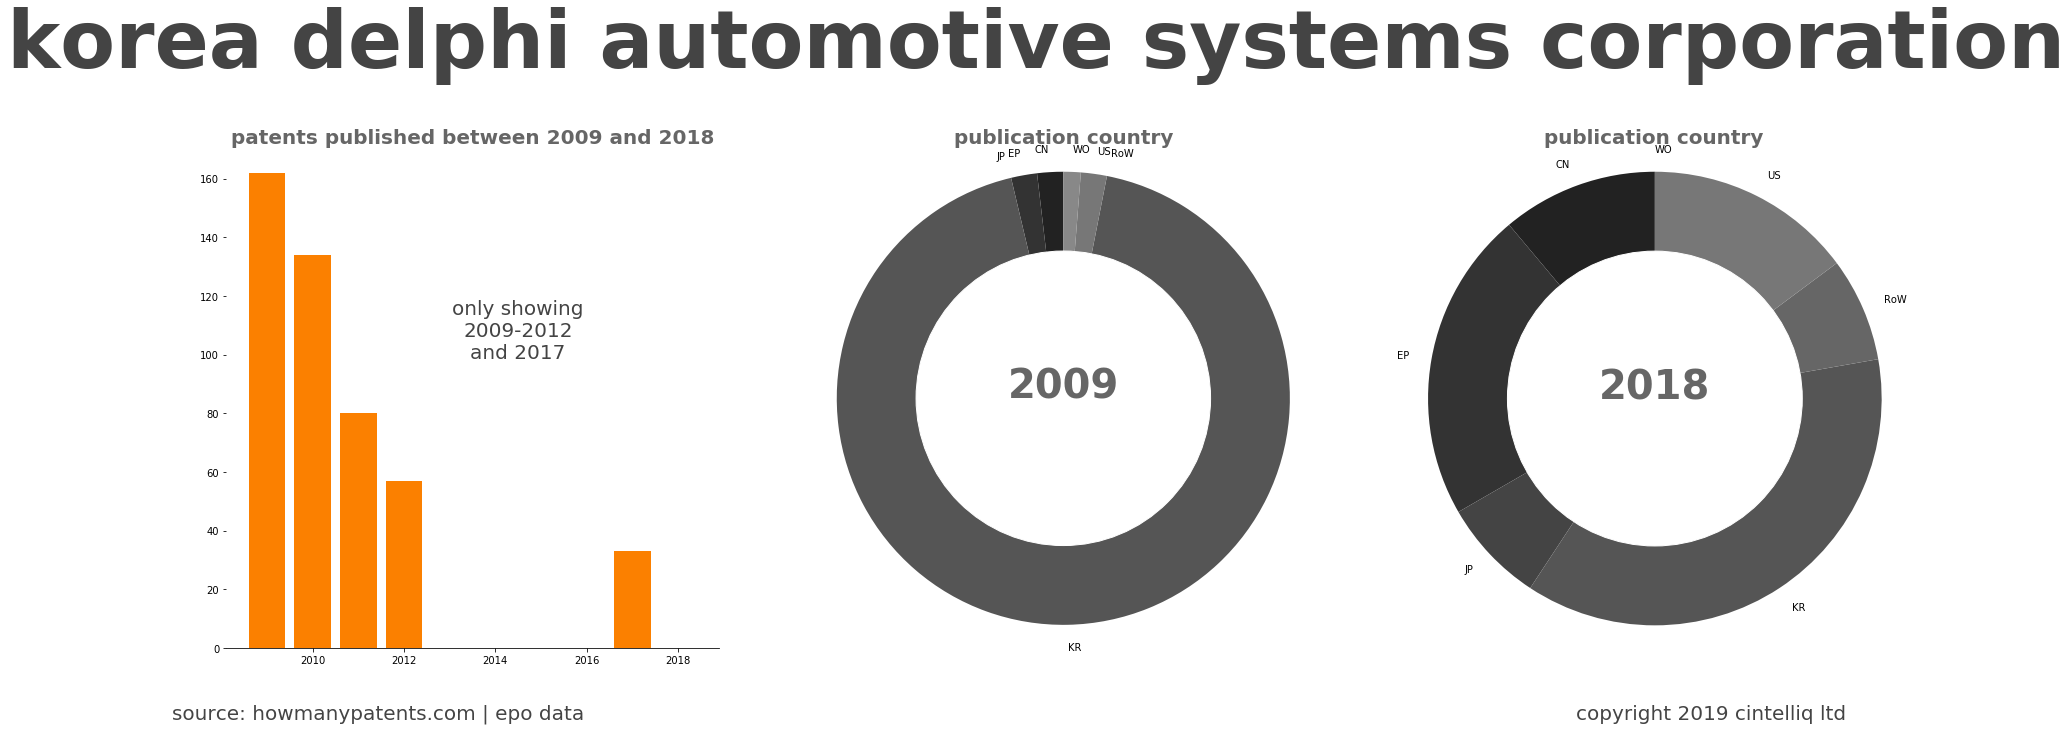 summary of patents for Korea Delphi Automotive Systems Corporation